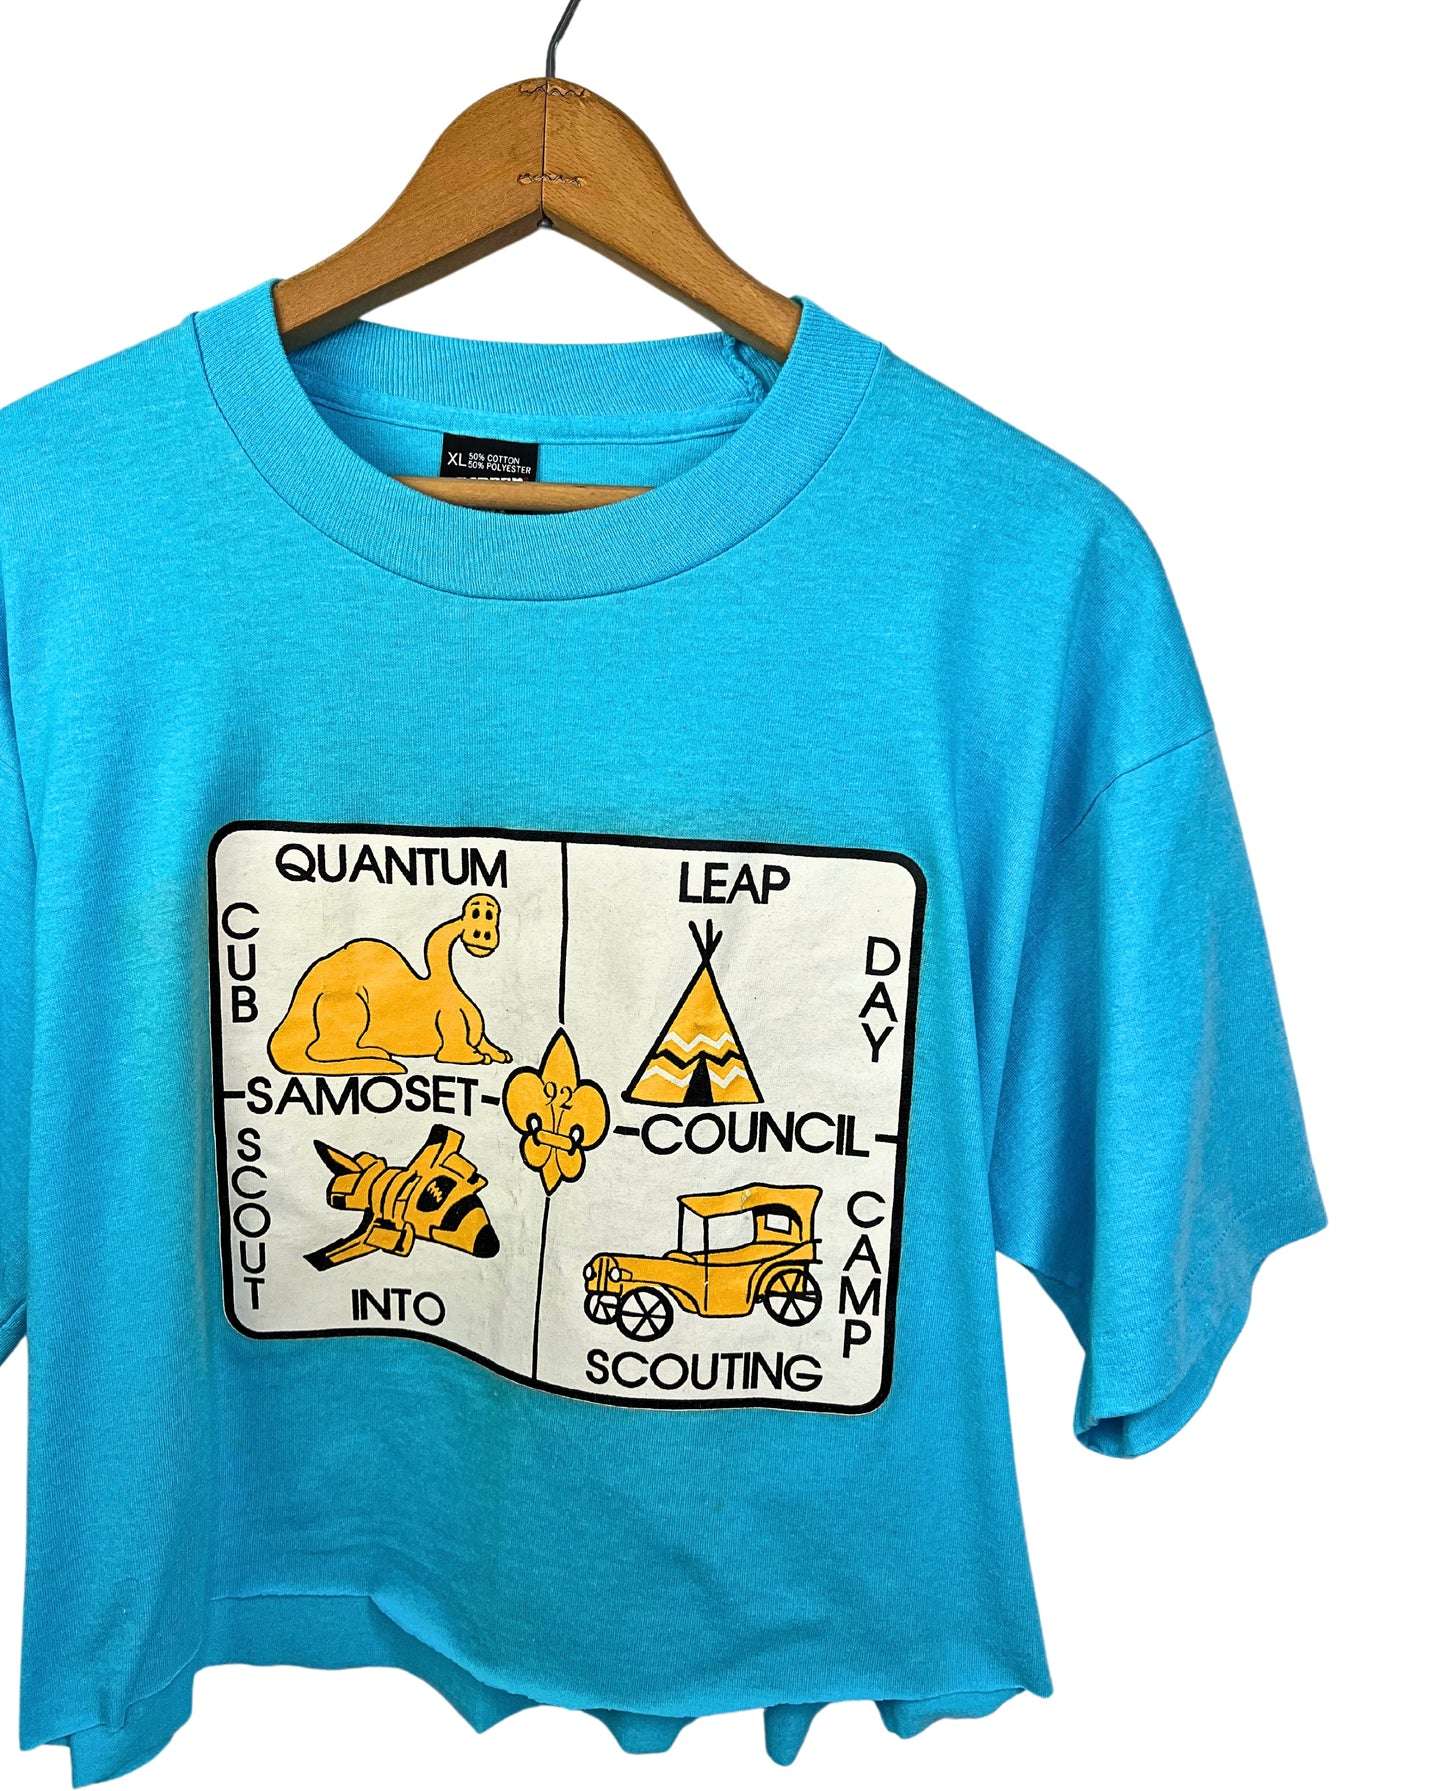 1992 CUB SCOUTS Quantum Leap Camp Crop Top T-Shirt